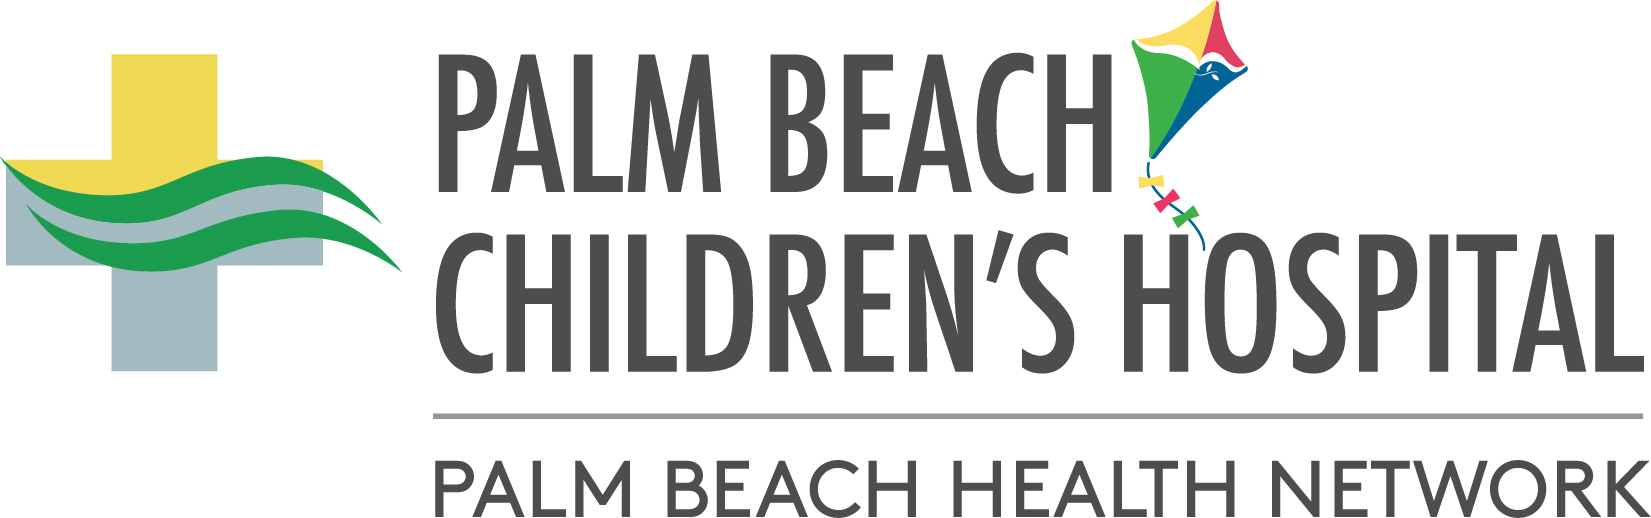 Palm Beach Children's Hospital